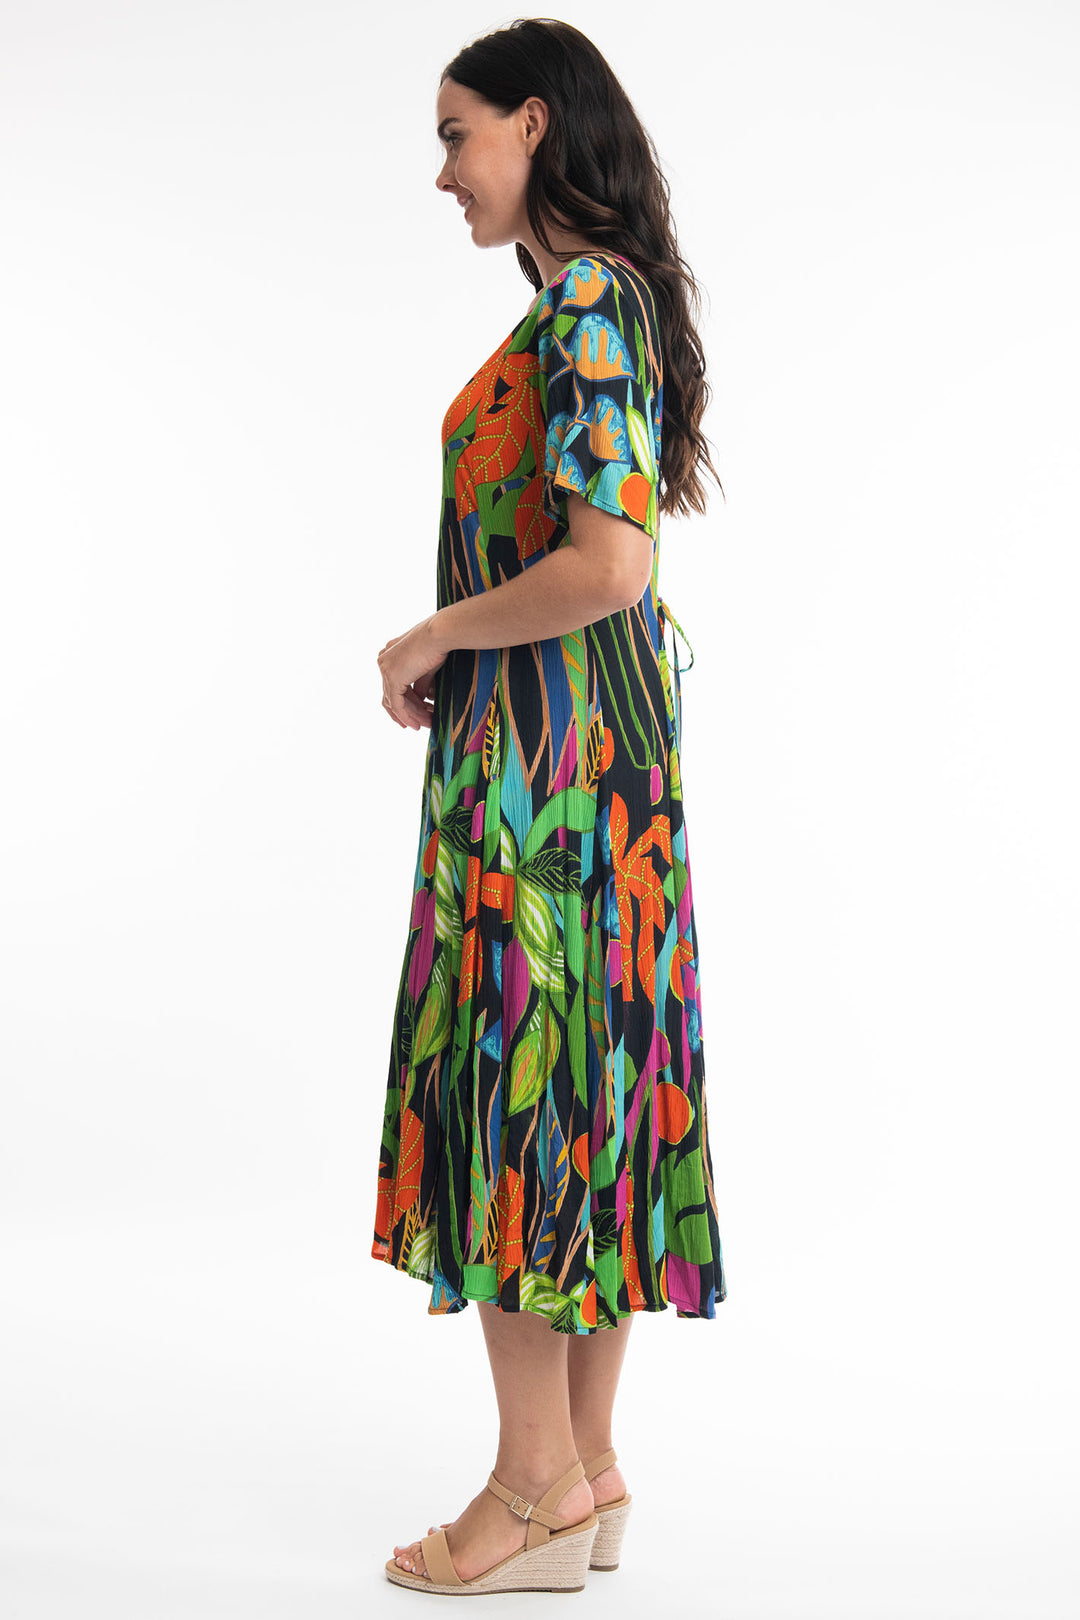 Orientique O9177 Nicossia Black Tropical Print Godet Dress - Experience Boutique